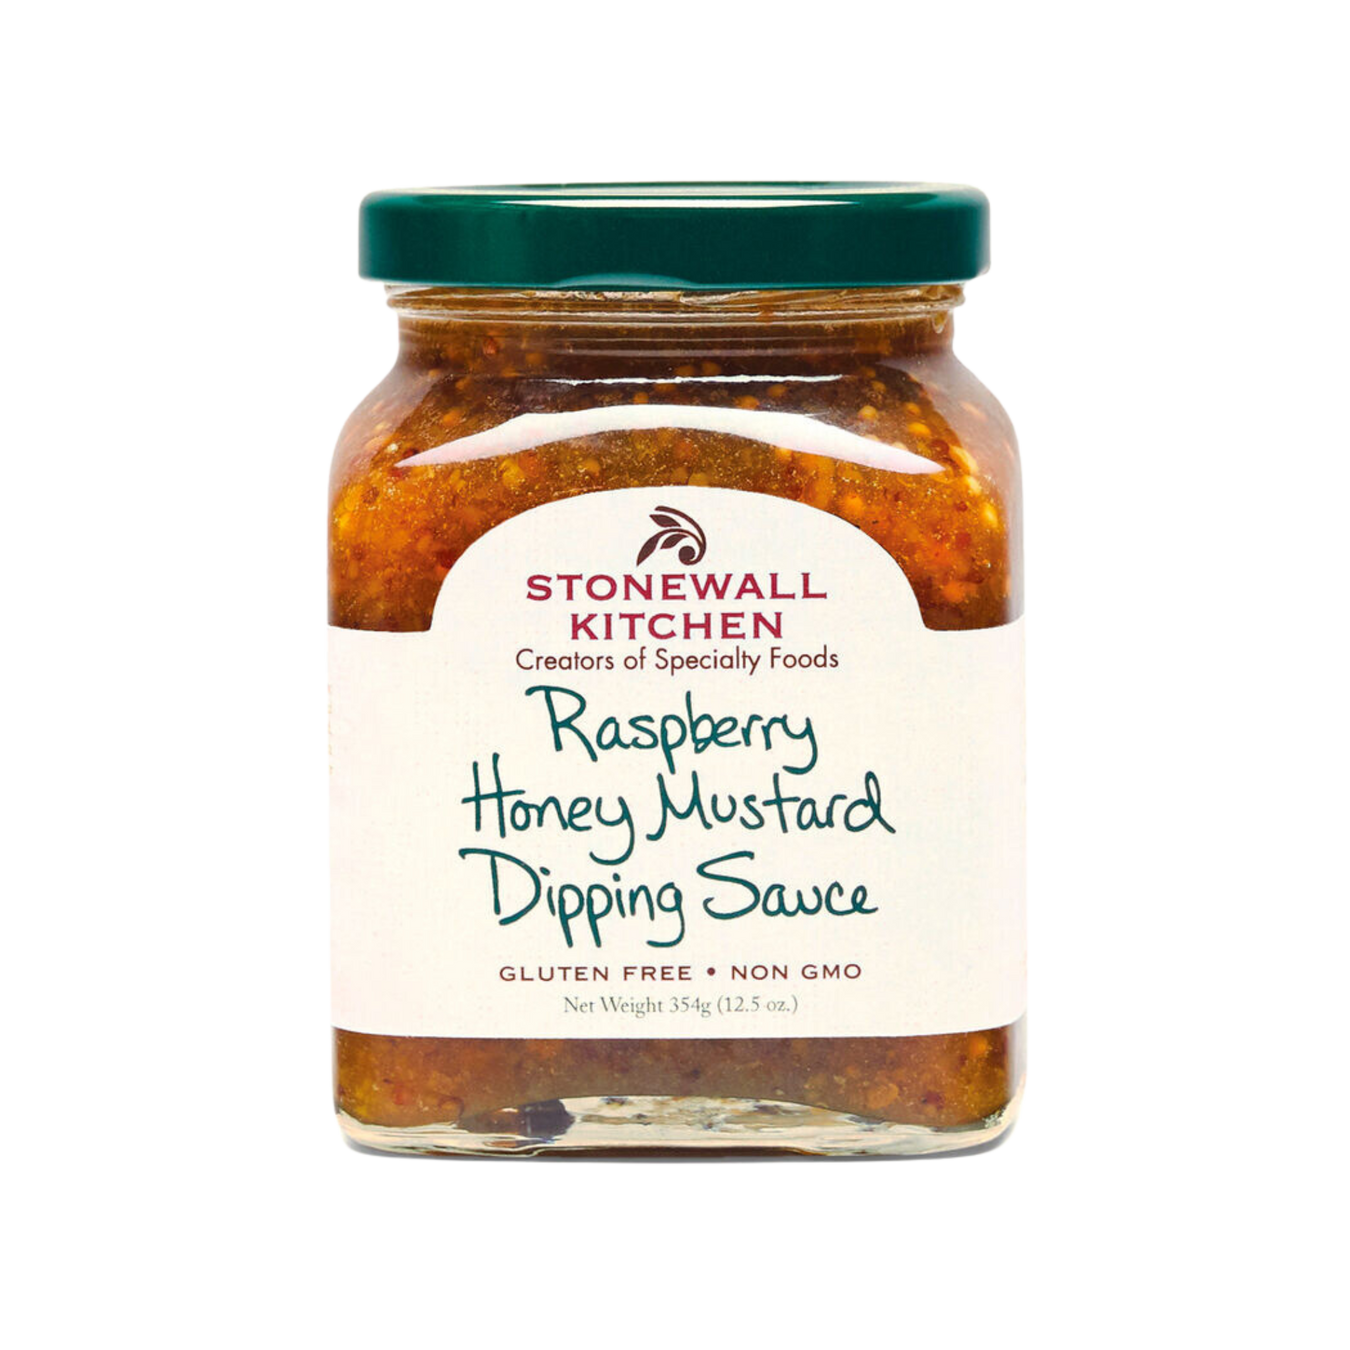 Stonewall Kitchen Raspberry Honey Mustard